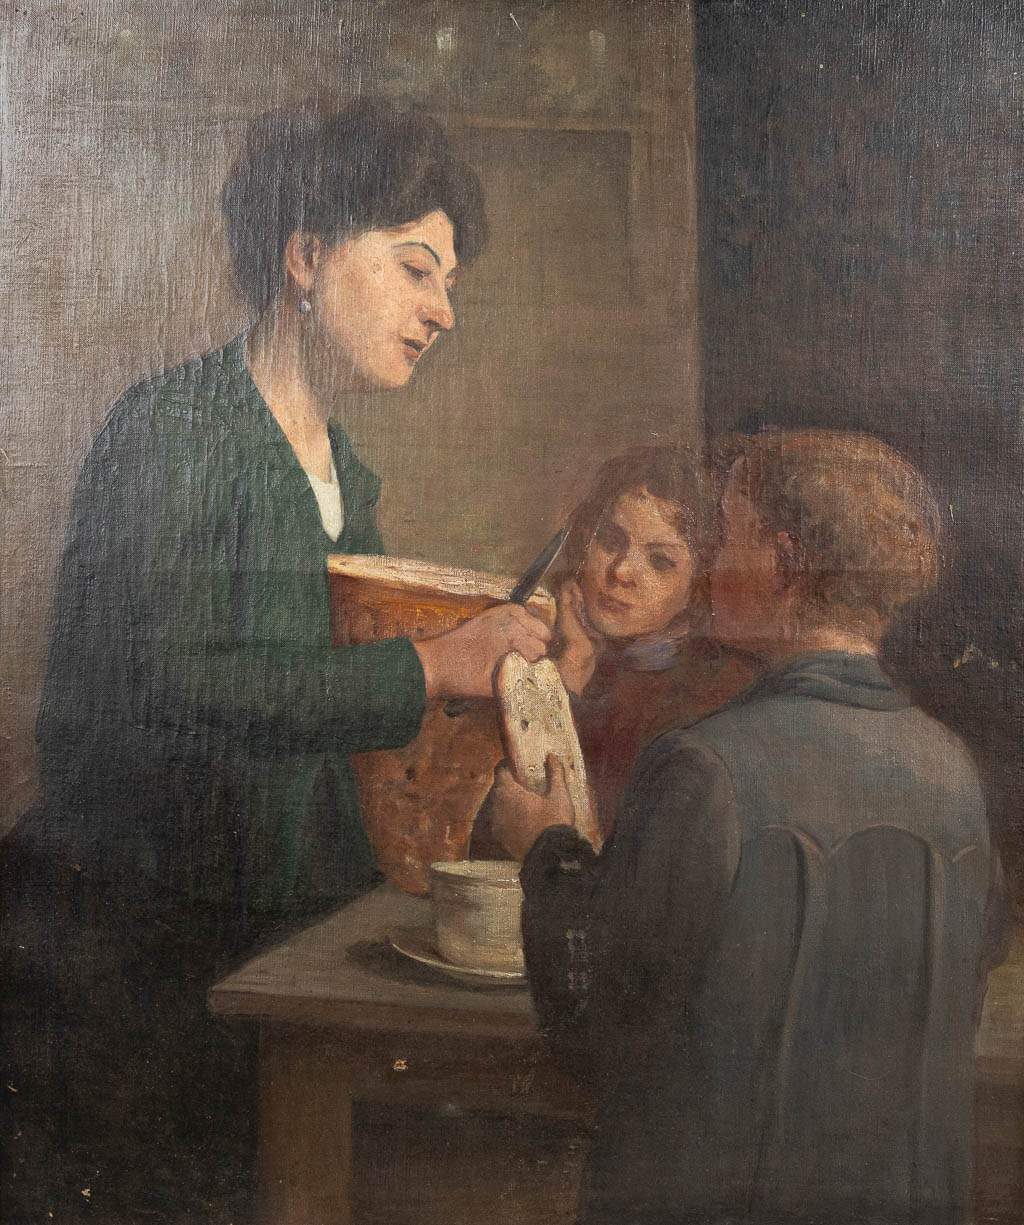 C. DUCOIN (XIX-XX) 'The Breakfast' a painting, oil on canvas. (57 x 66 cm)